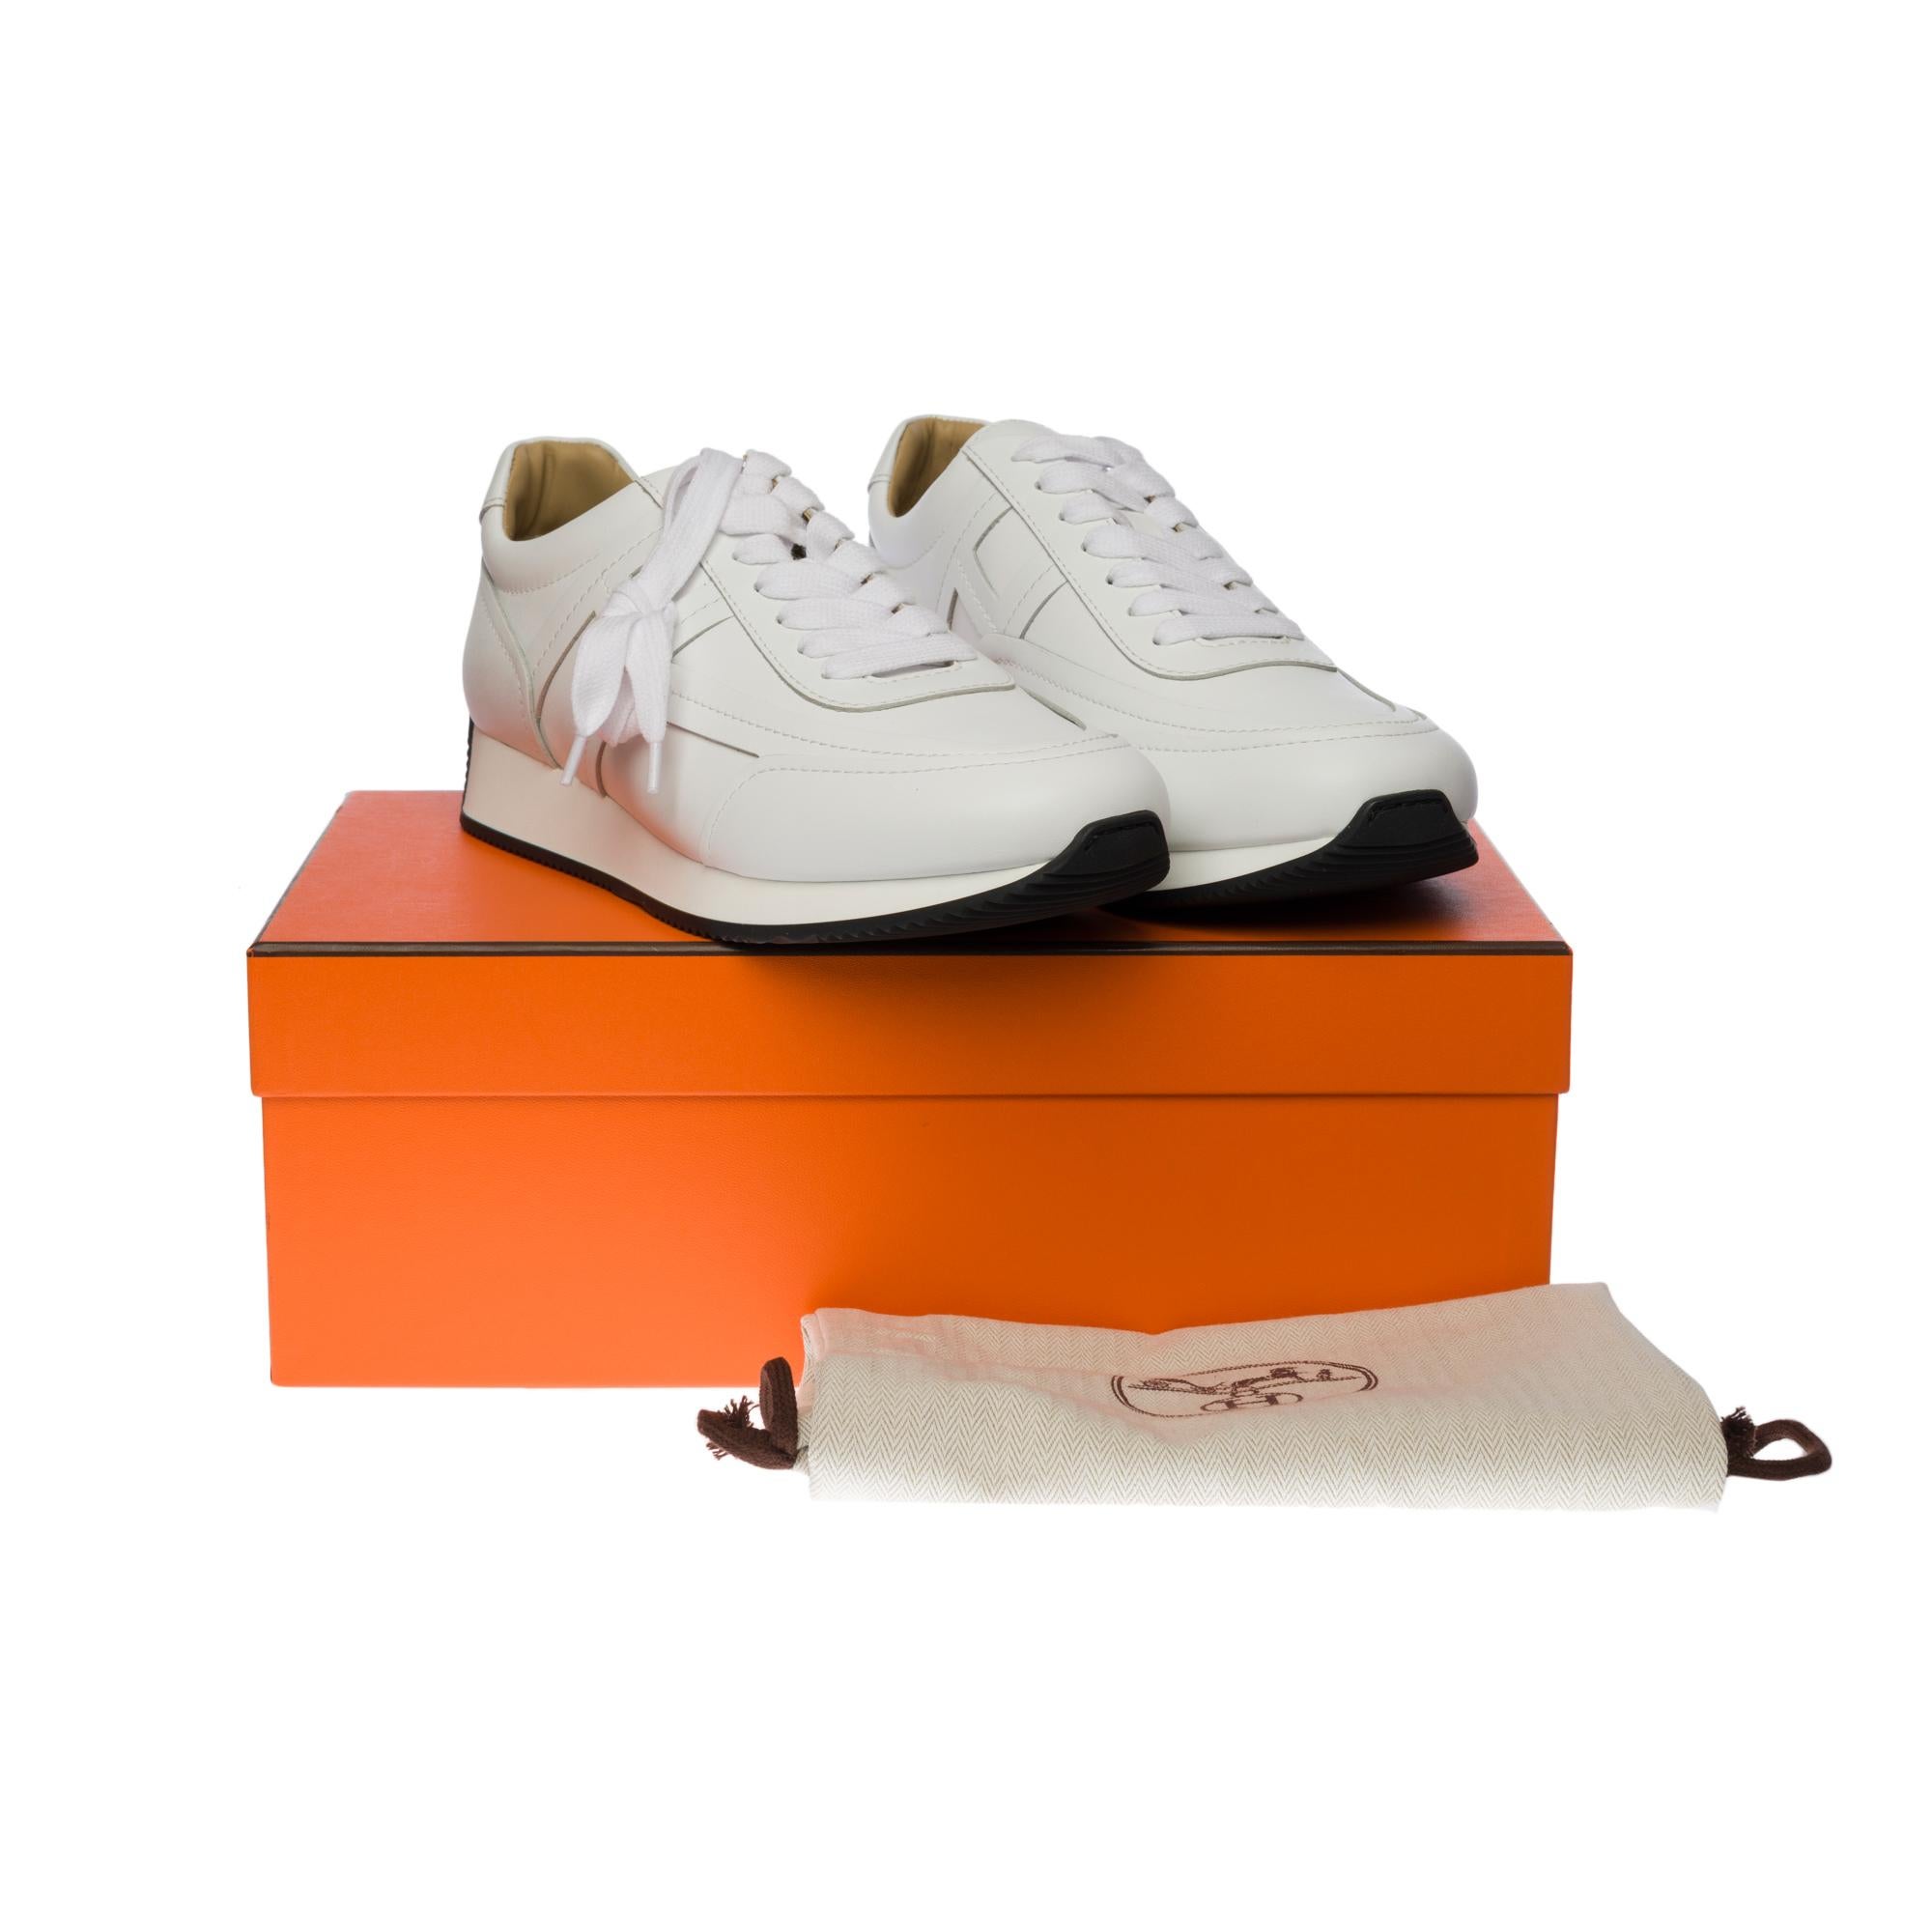 New - Hermès Chris Men's Sneakers in white calf - Size 43.5 3